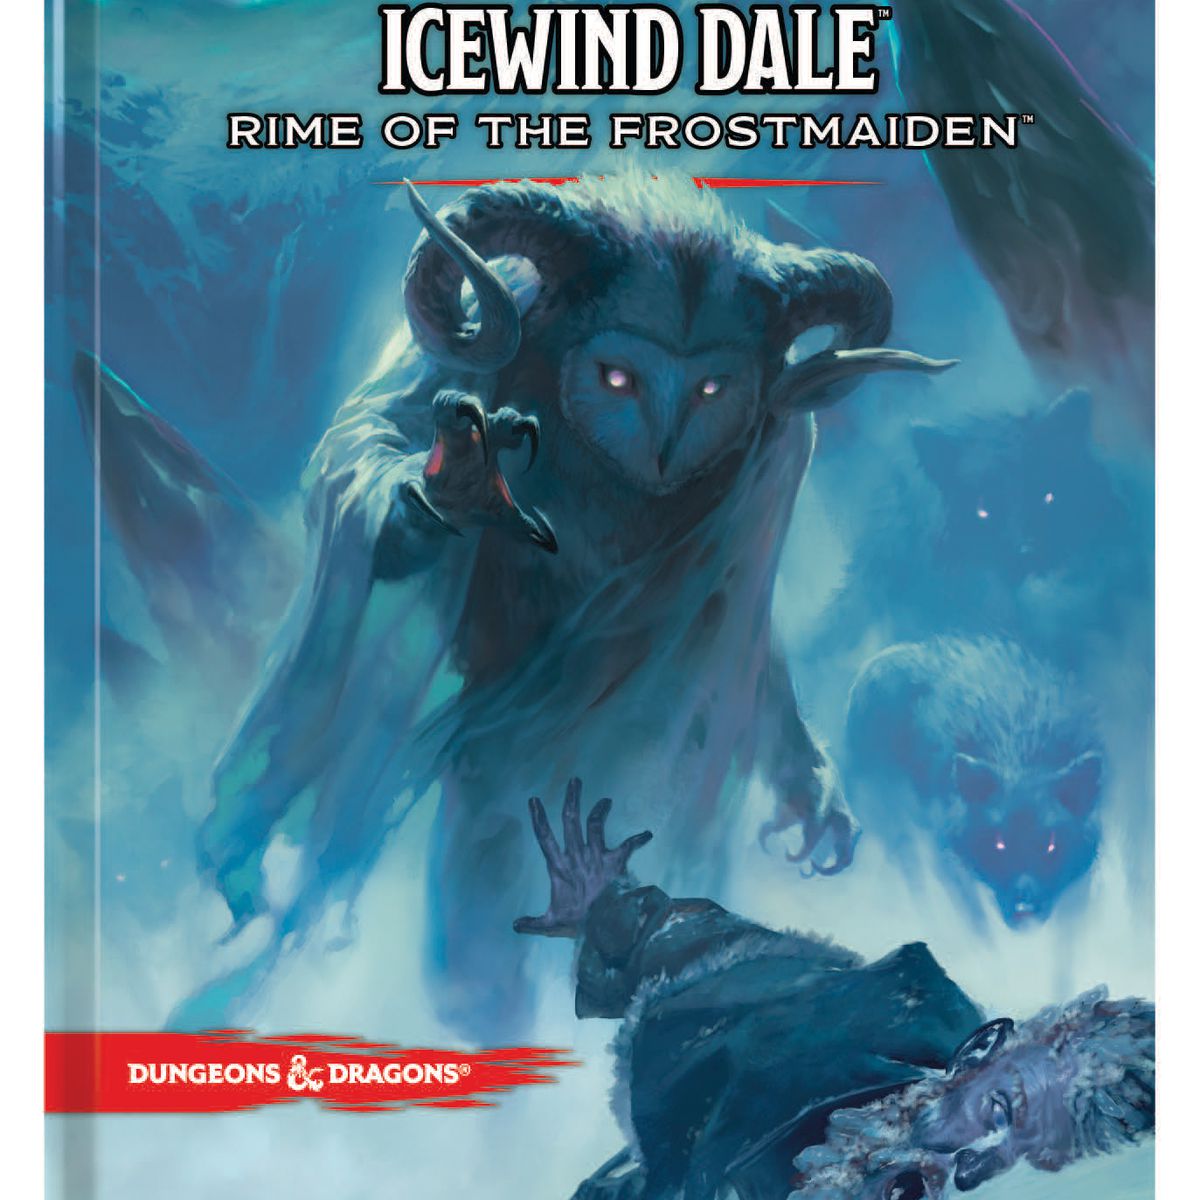 Couverture, y compris le texte, pour Icewind Dale : Rime of the Frostmaiden.